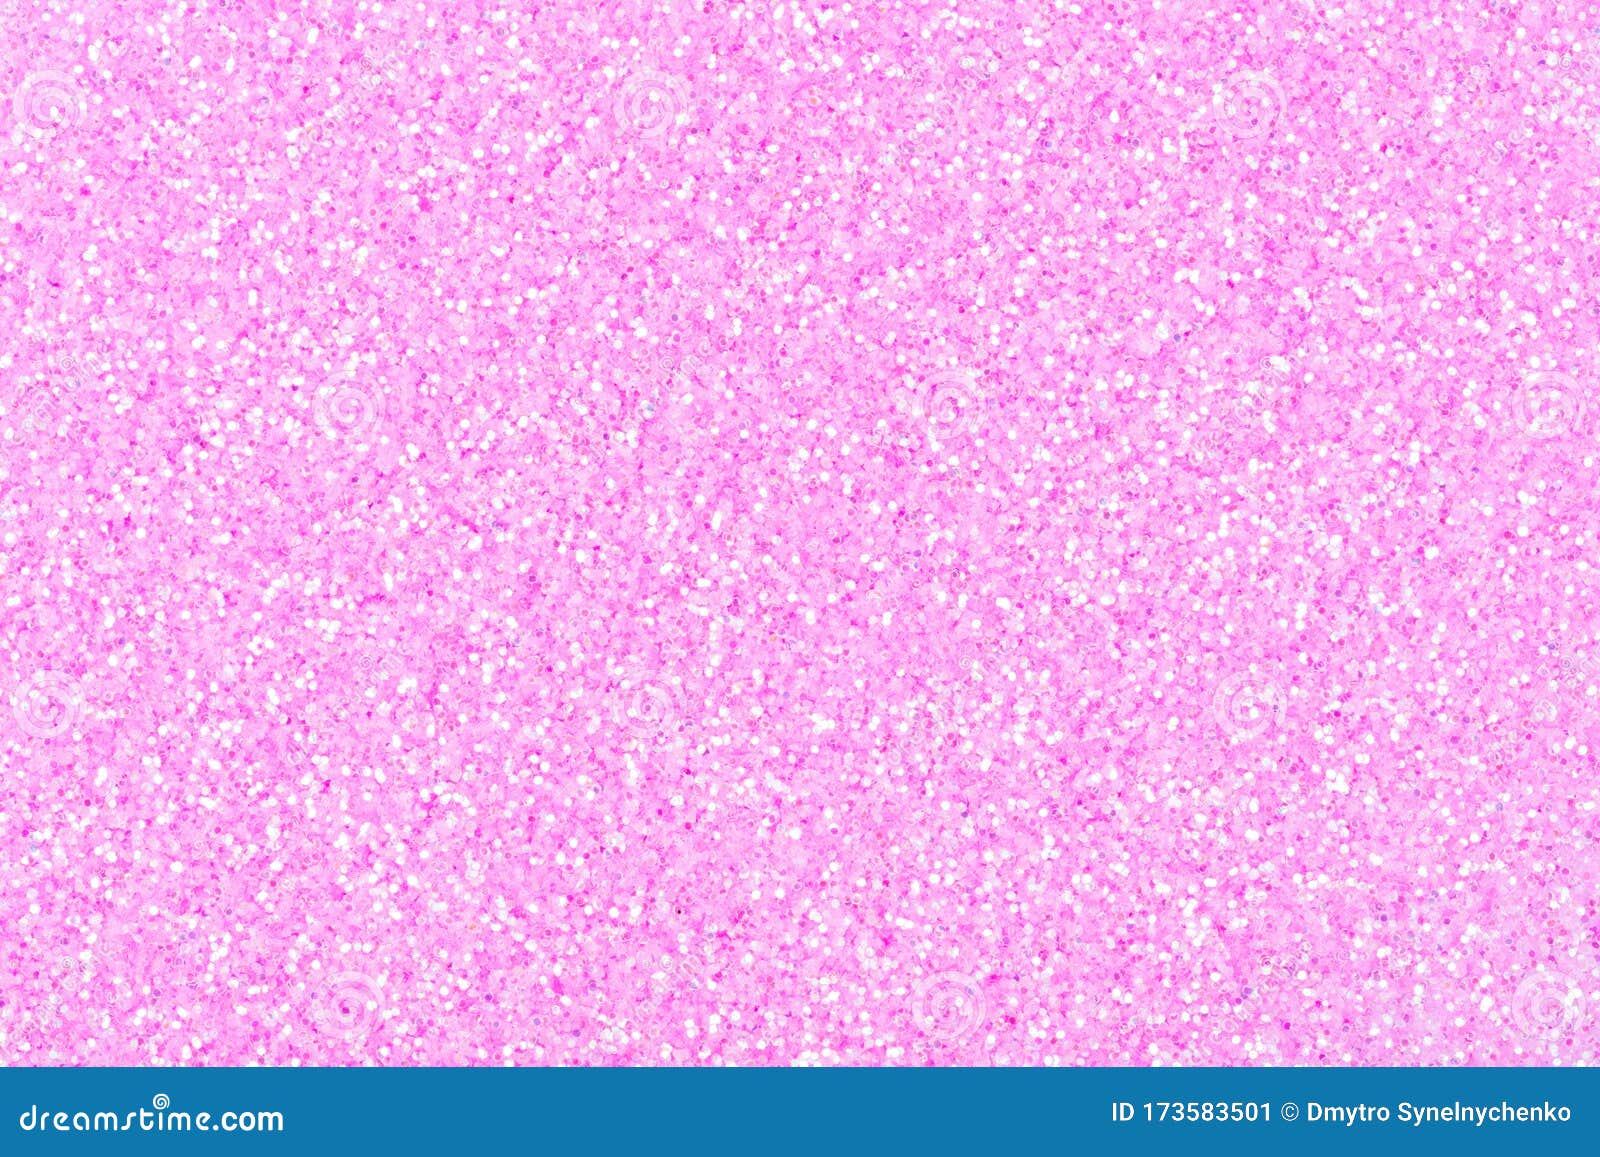 dots pink glitter wallpaper white non-woven